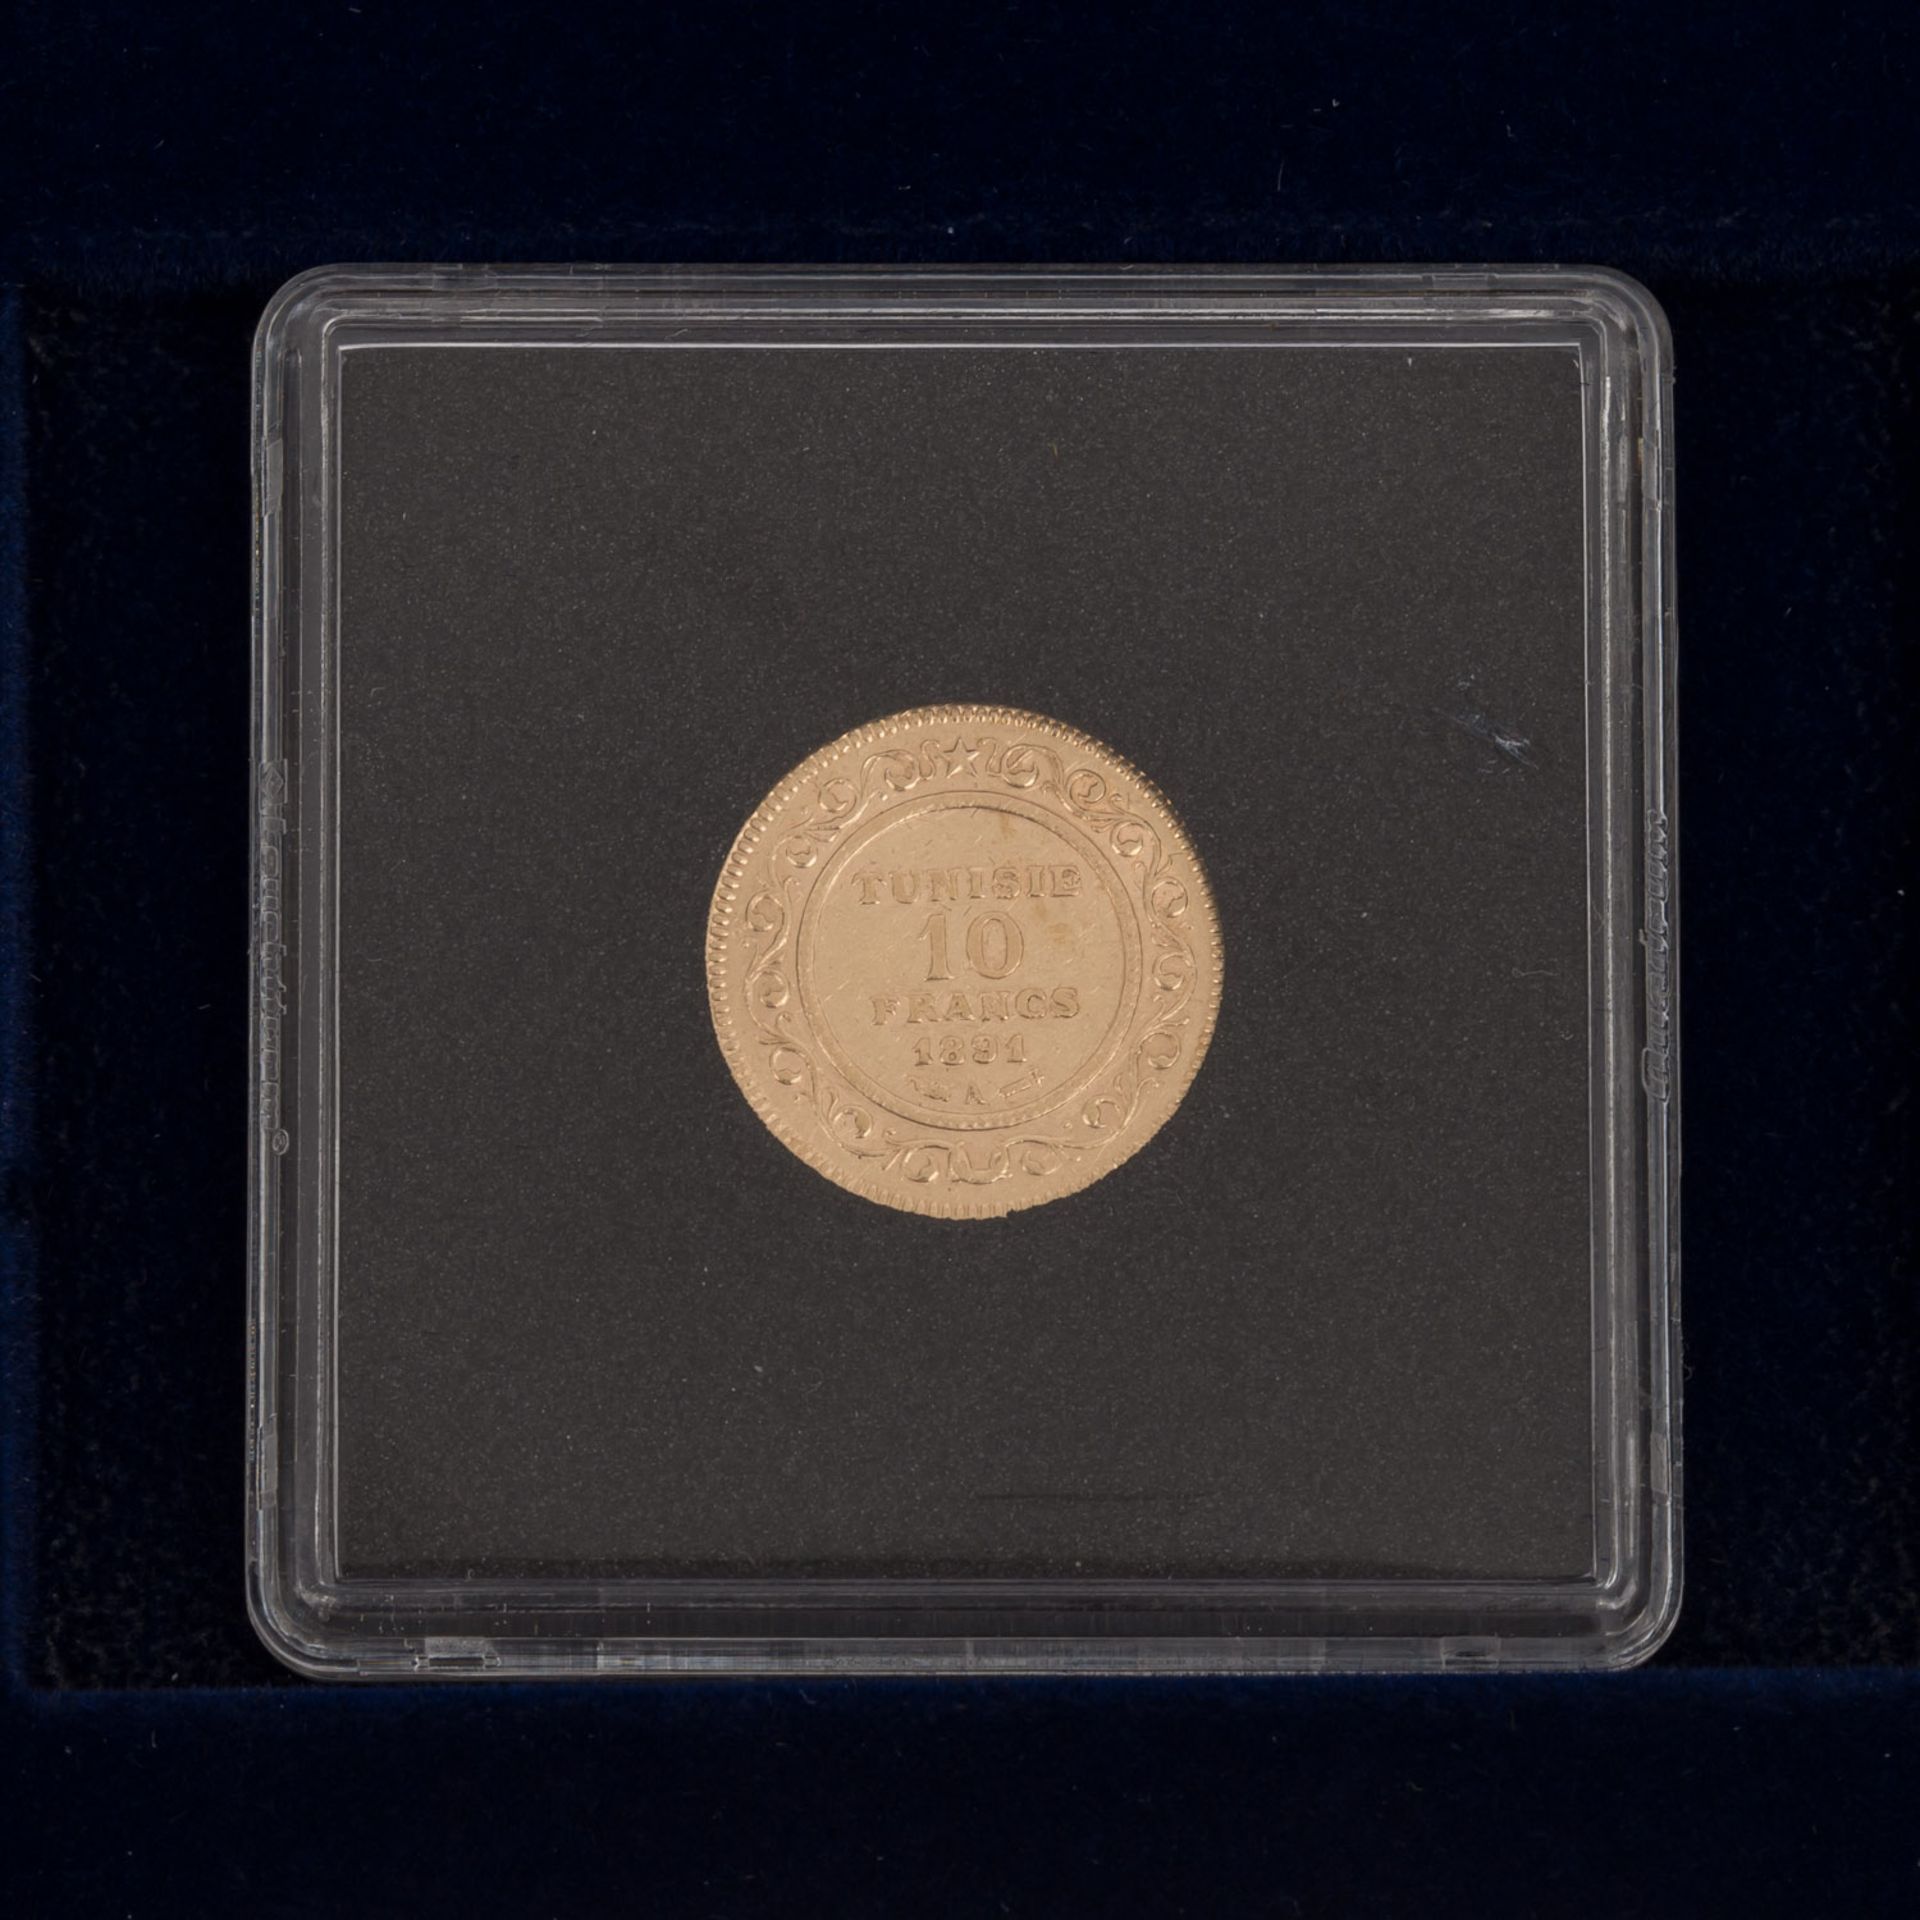 GOLD aus 1001 Nacht - Konvolut mit 20 Francs Tunesien 1892 A,10 Francs Tunesien 1891 A sowie Iran - Bild 5 aus 7